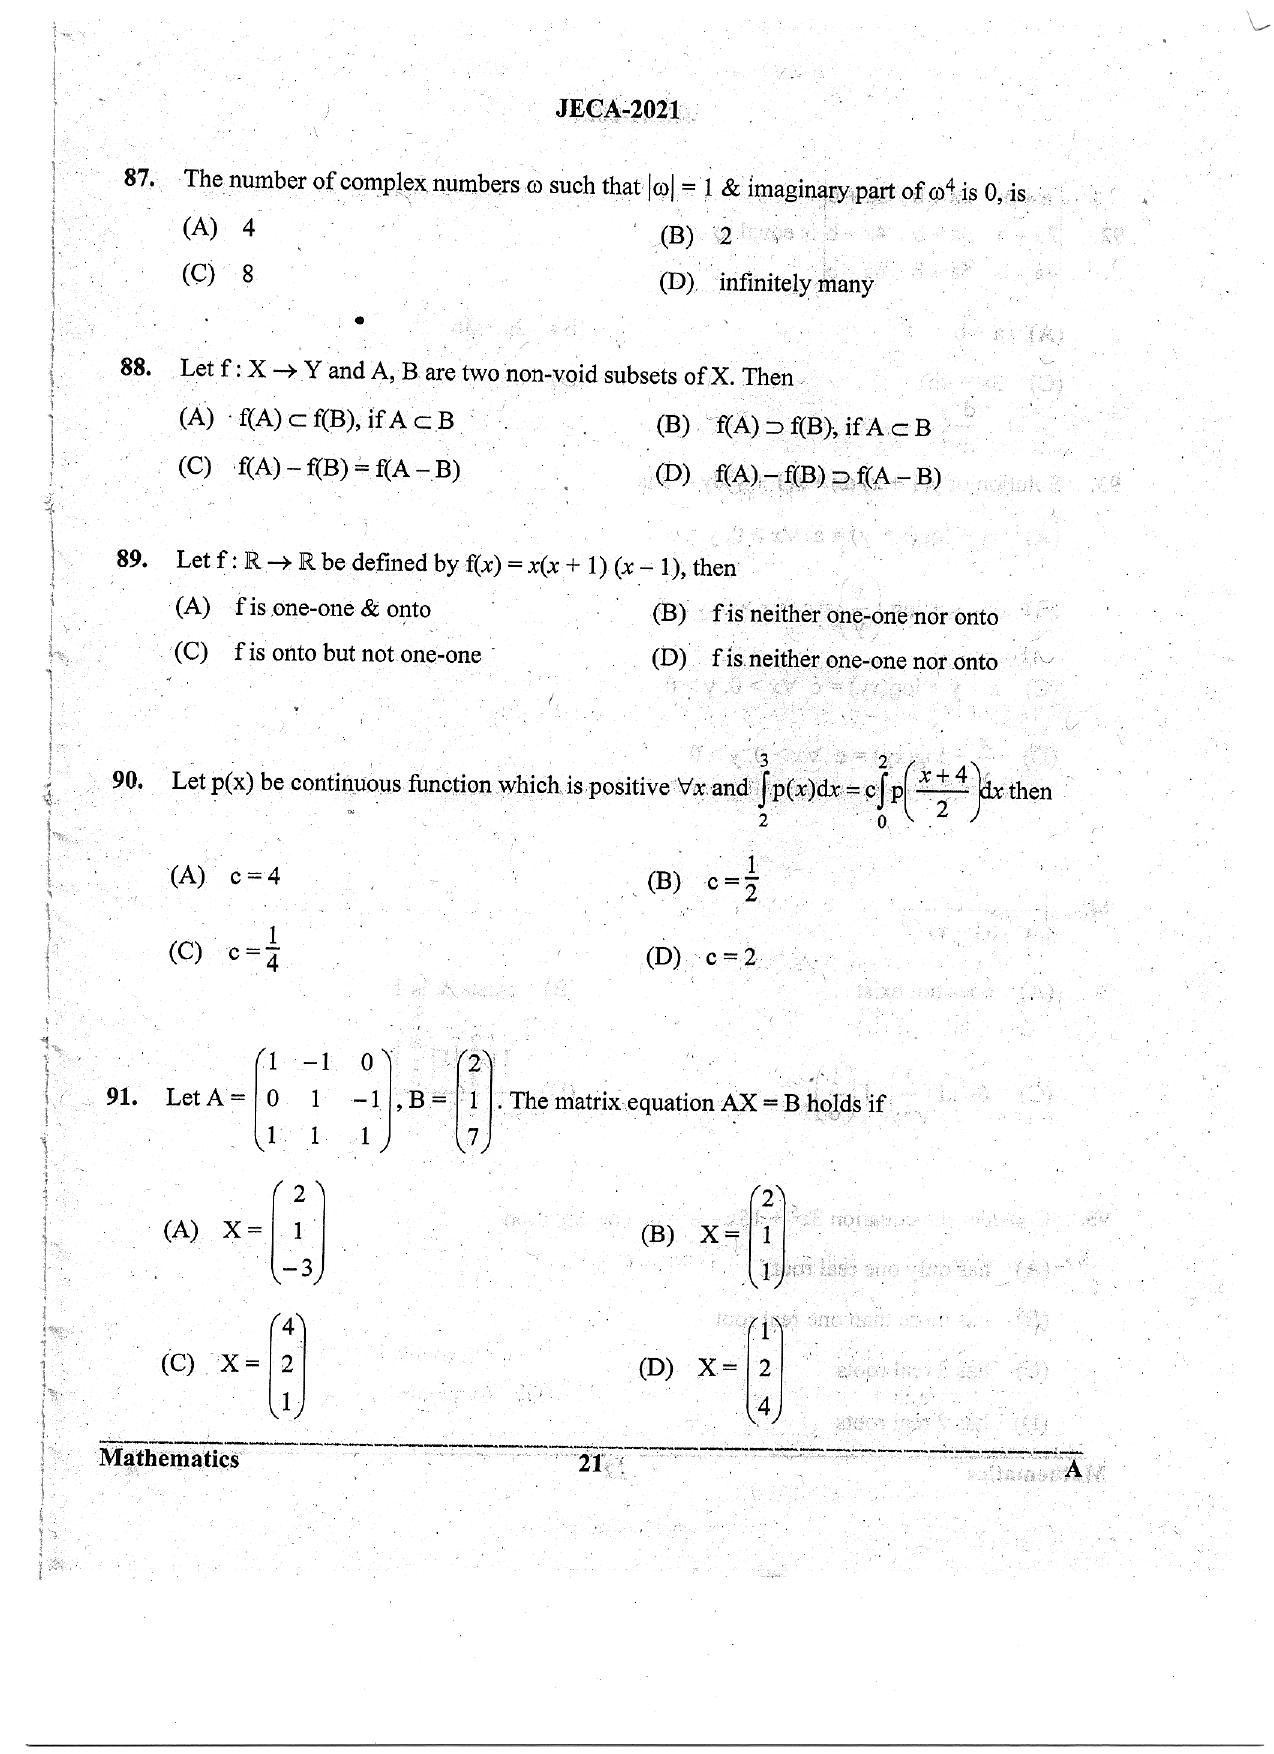 WB JECA 2021 Mathematics Question Paper - Page 21